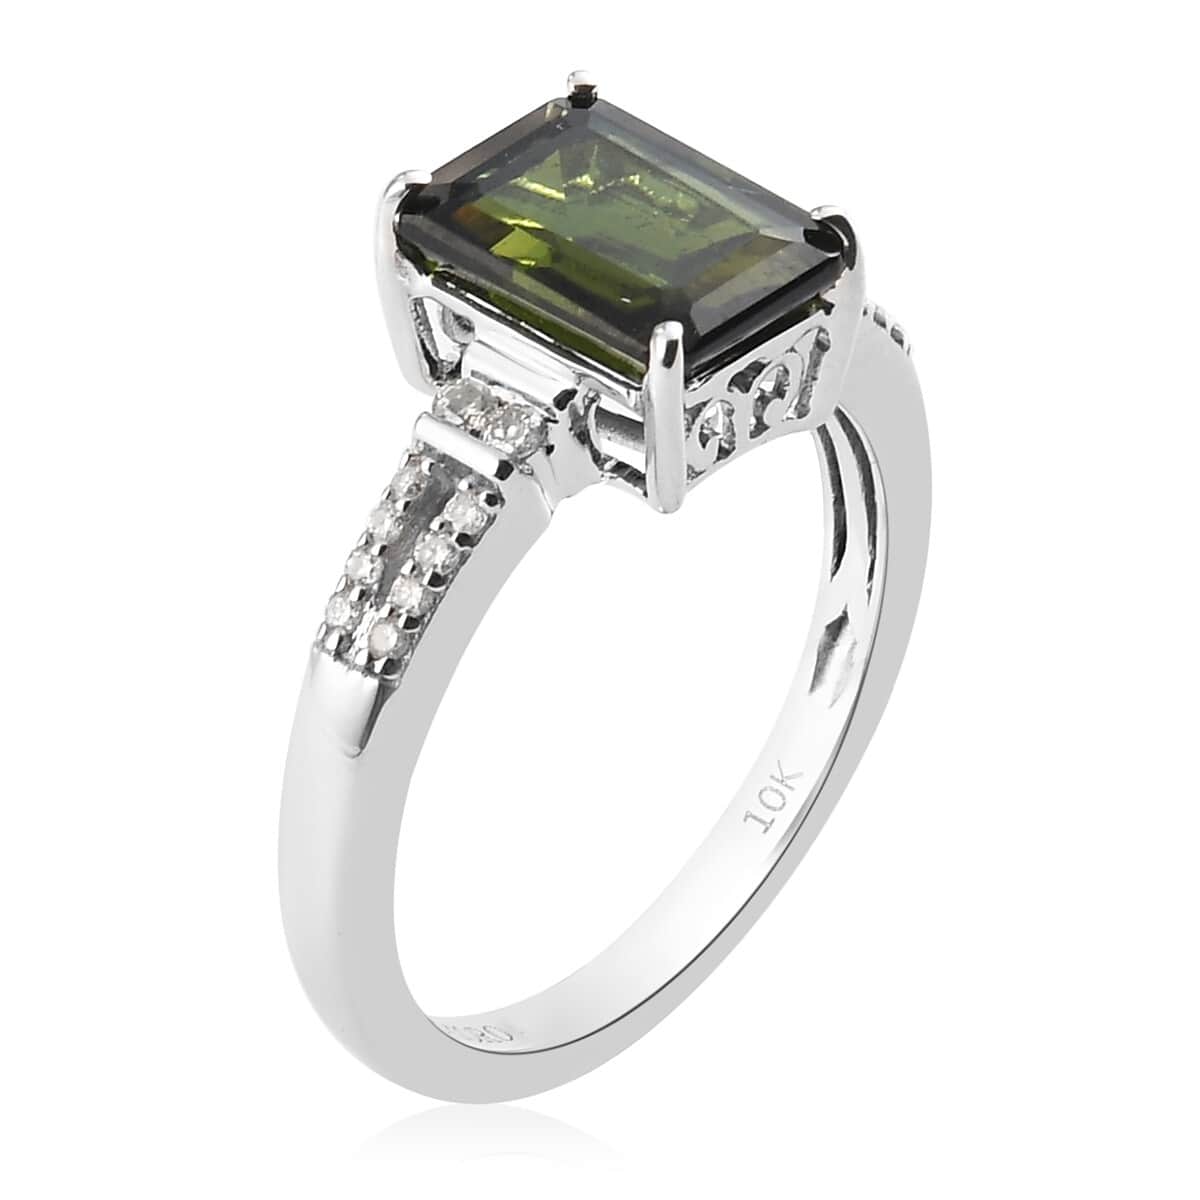 Luxoro 10K White Gold Premium Green Tourmaline and Diamond Ring (Size 7.0) 2.60 Grams 2.50 ctw image number 3